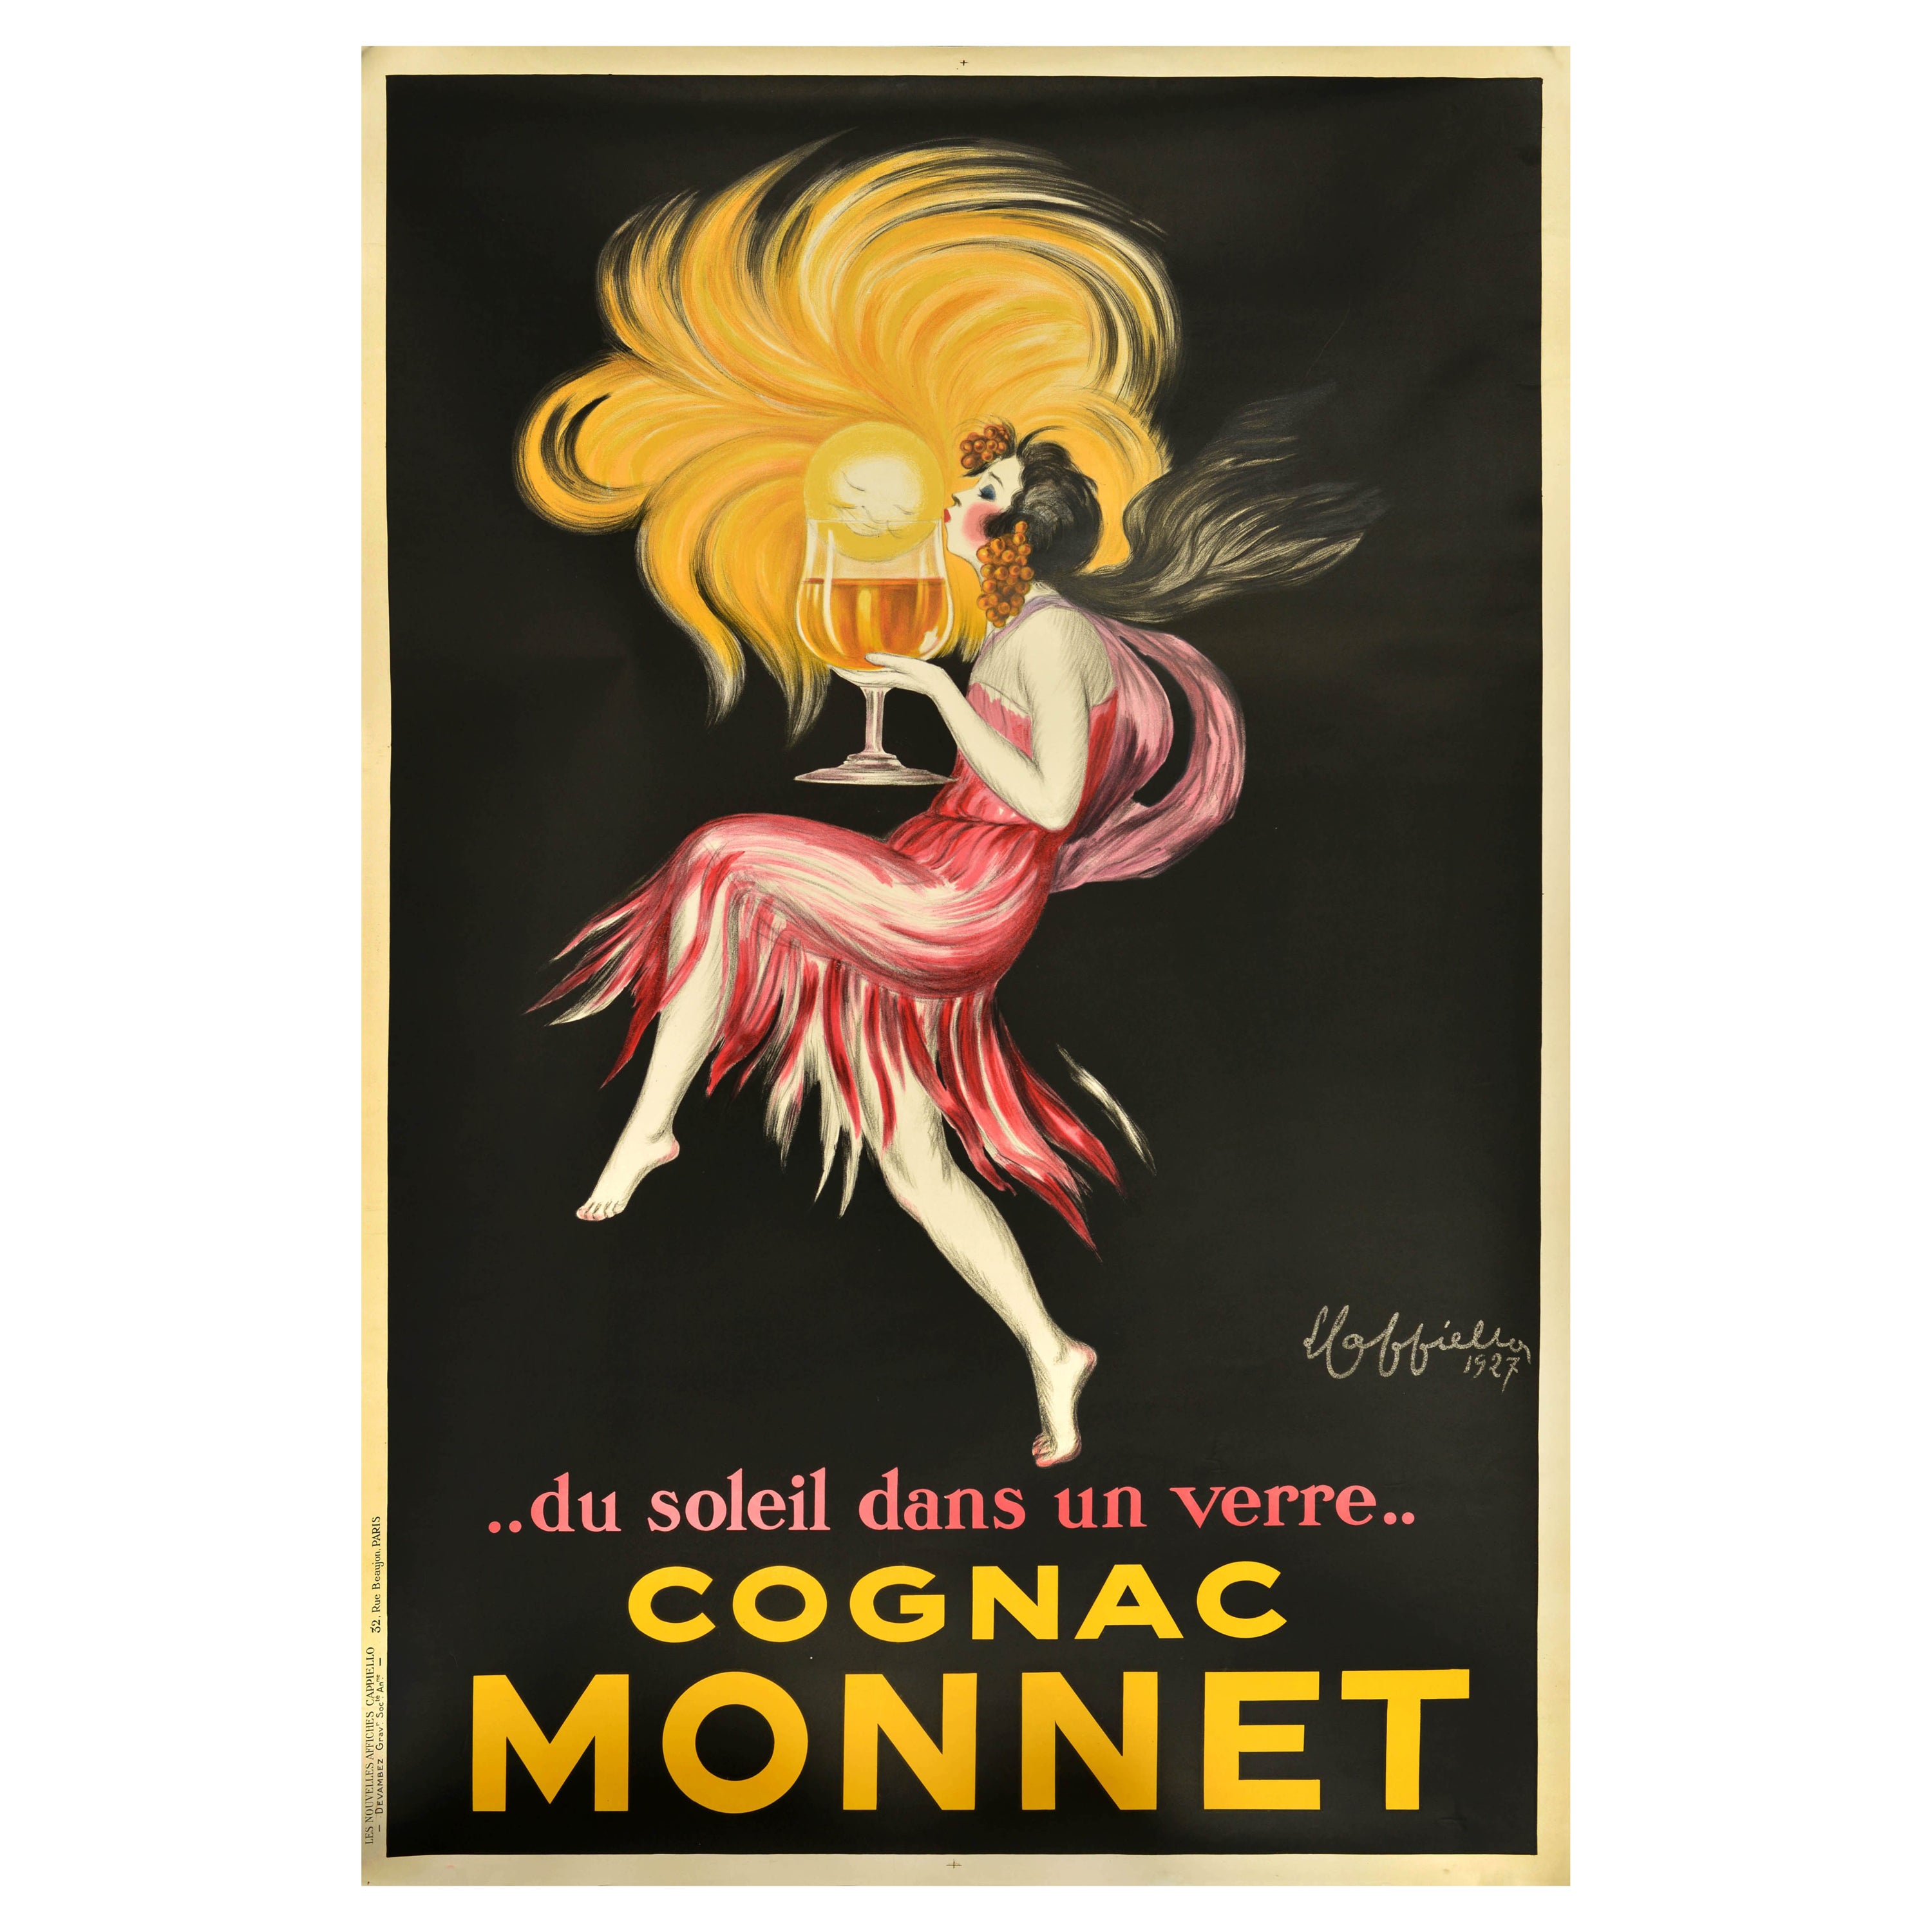 Original Vintage Drink Advertising Poster Cognac Monnet Leonetto Cappiello For Sale